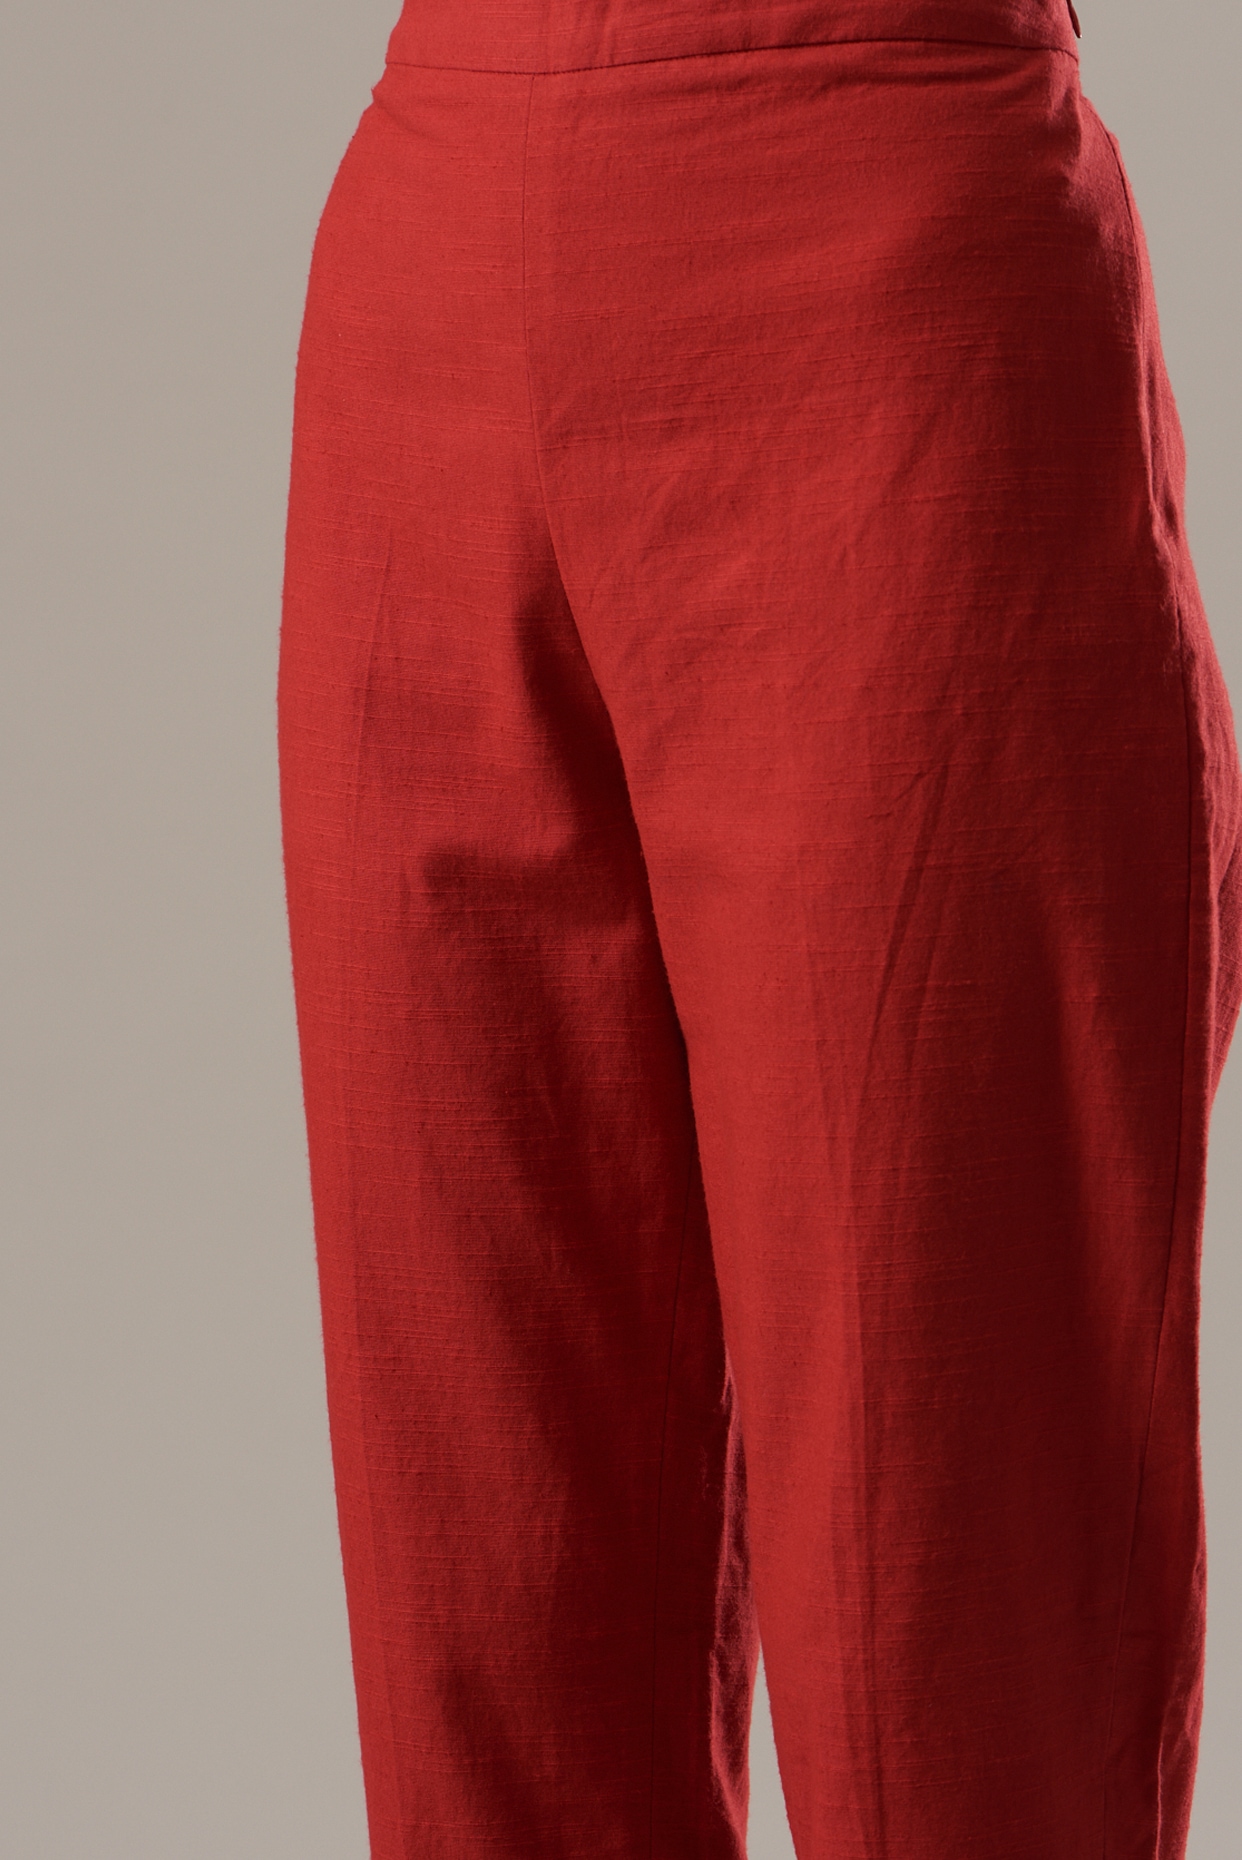 Cotton Harem Pants Regular Fit Women Trousers red Size xs3xl 2638  Model NameNumber